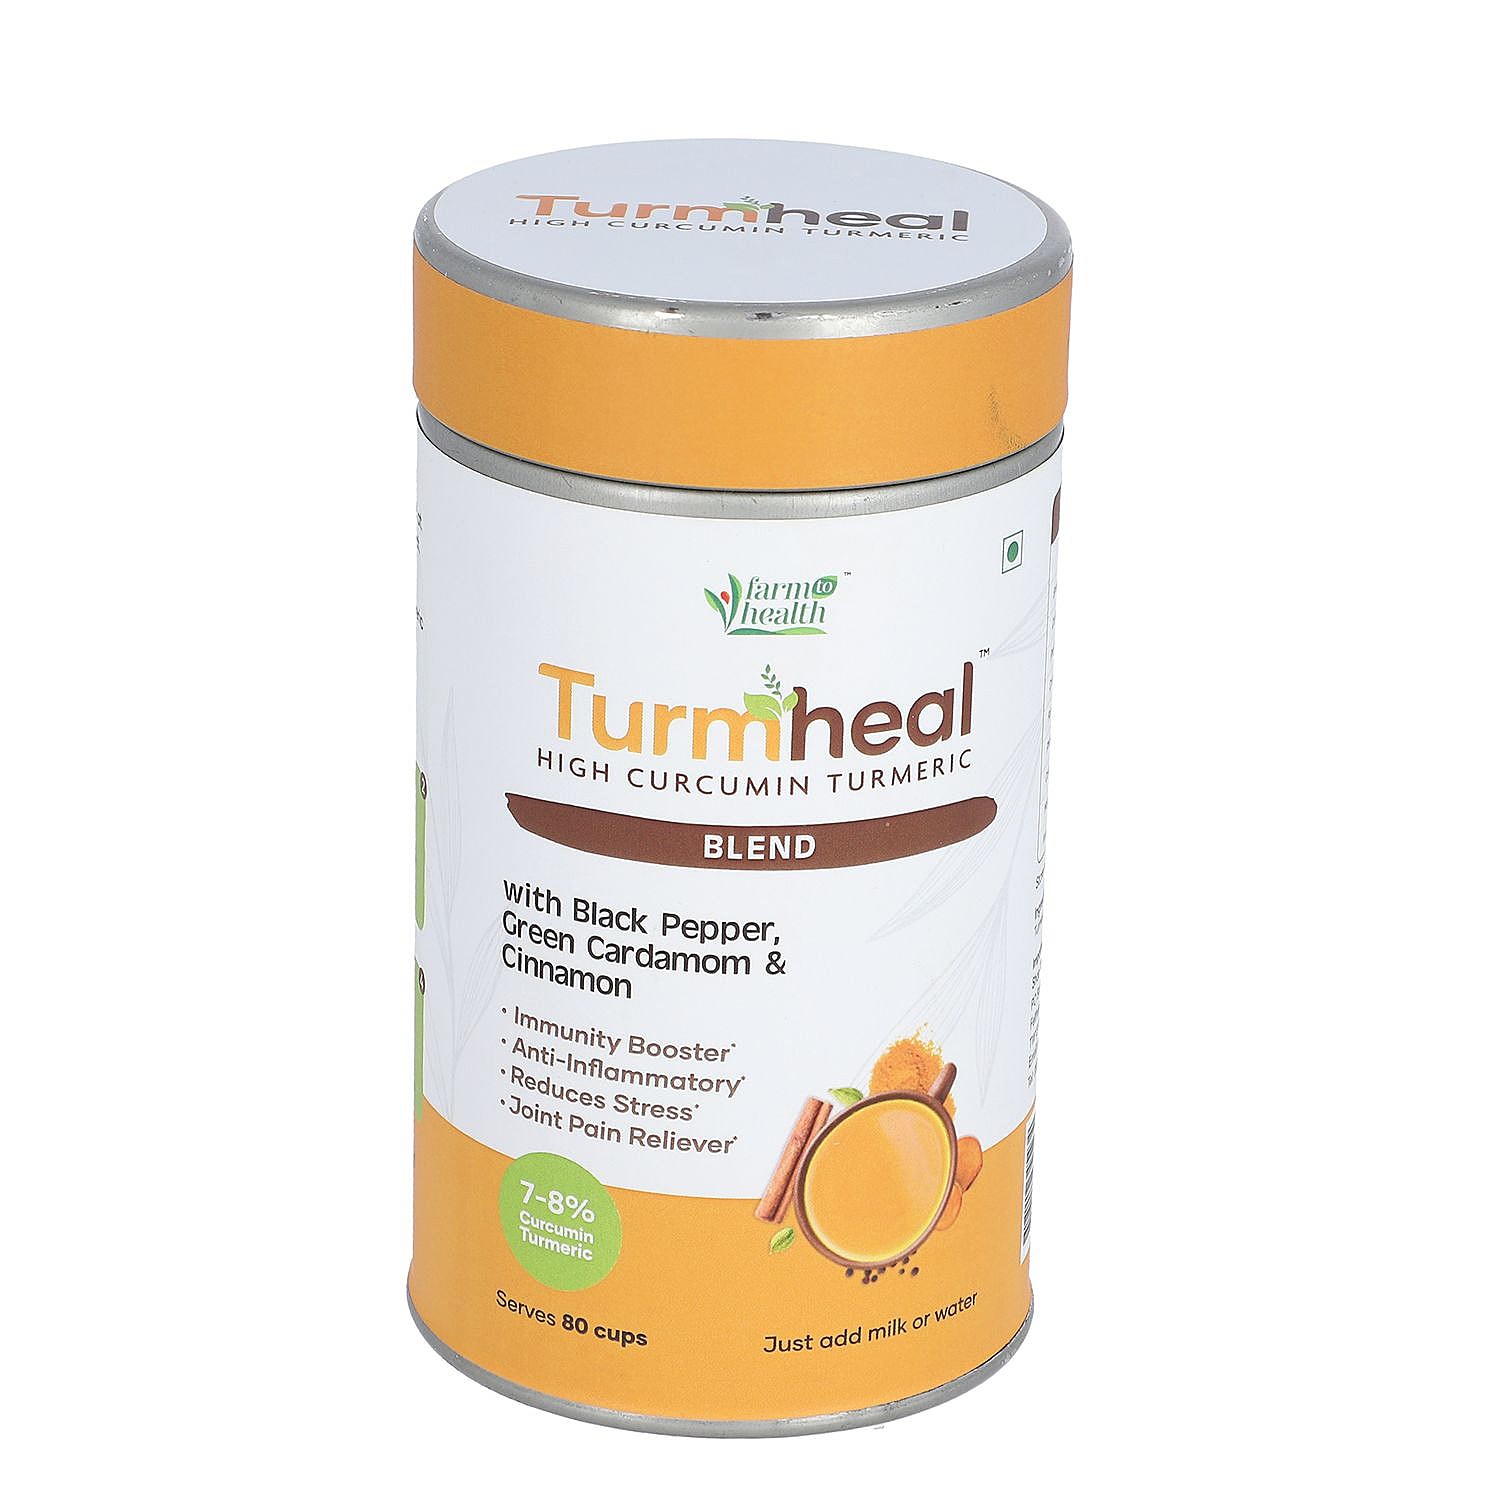 Turmheal Immunity booster Energy Drink